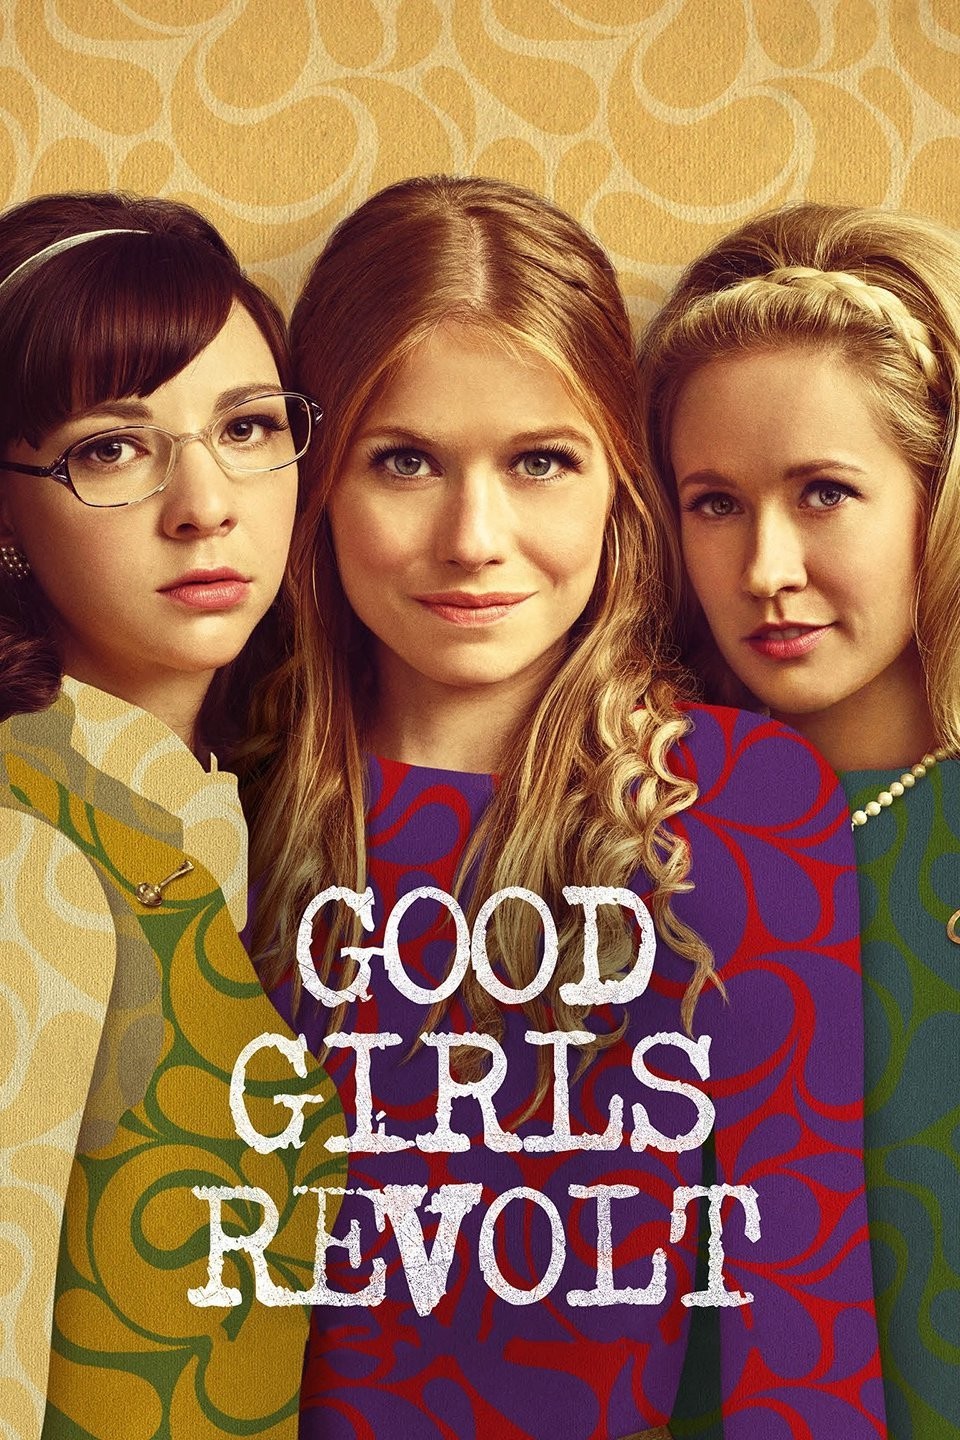 Good Girls Revolt - Rotten Tomatoes